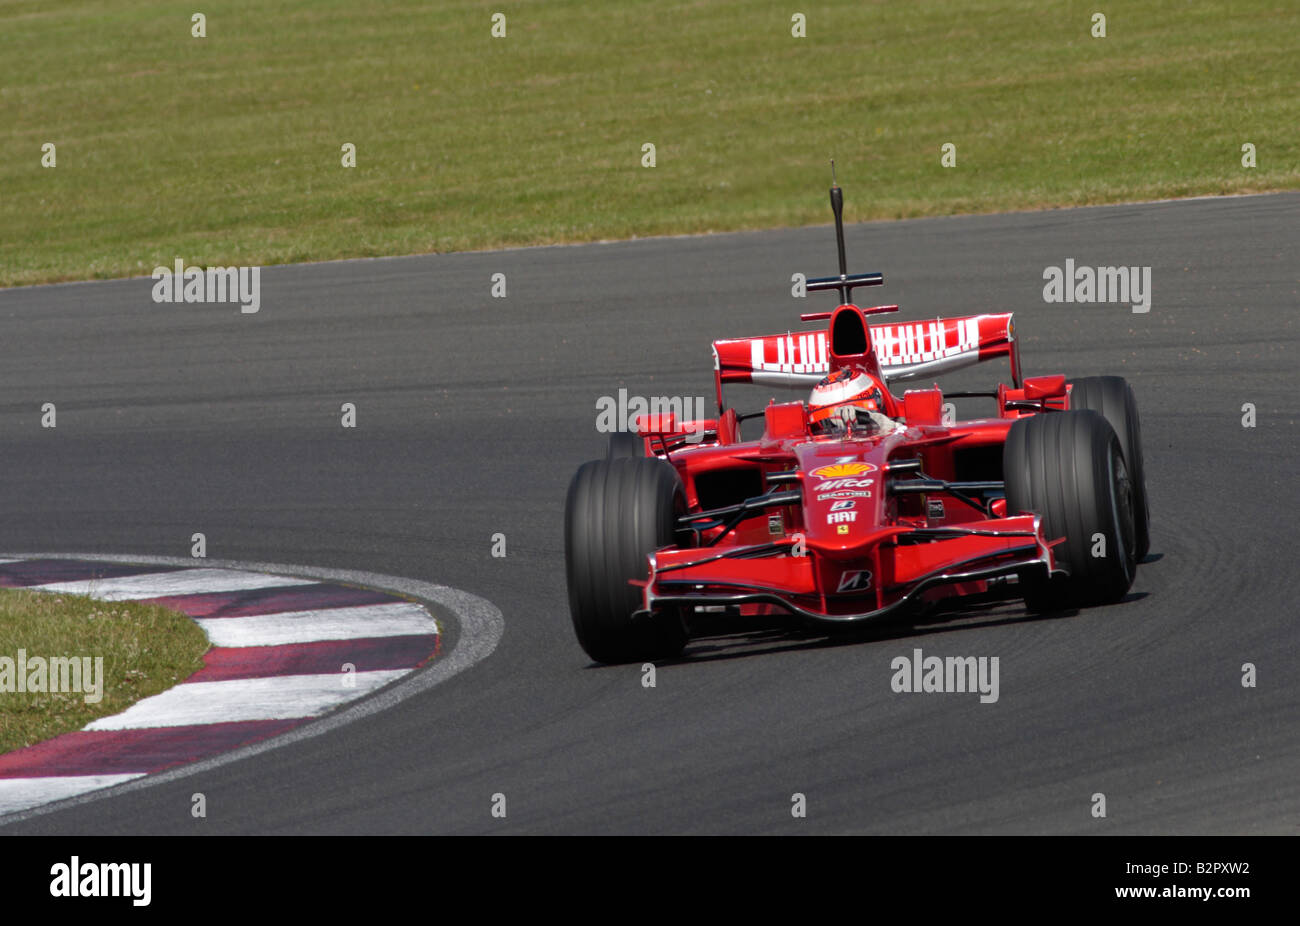 Kimi Räikkönen en la Scuderia Ferrari F2008 alrededor del coche de carreras de F1, Silverstone Loughfield UK Foto de stock